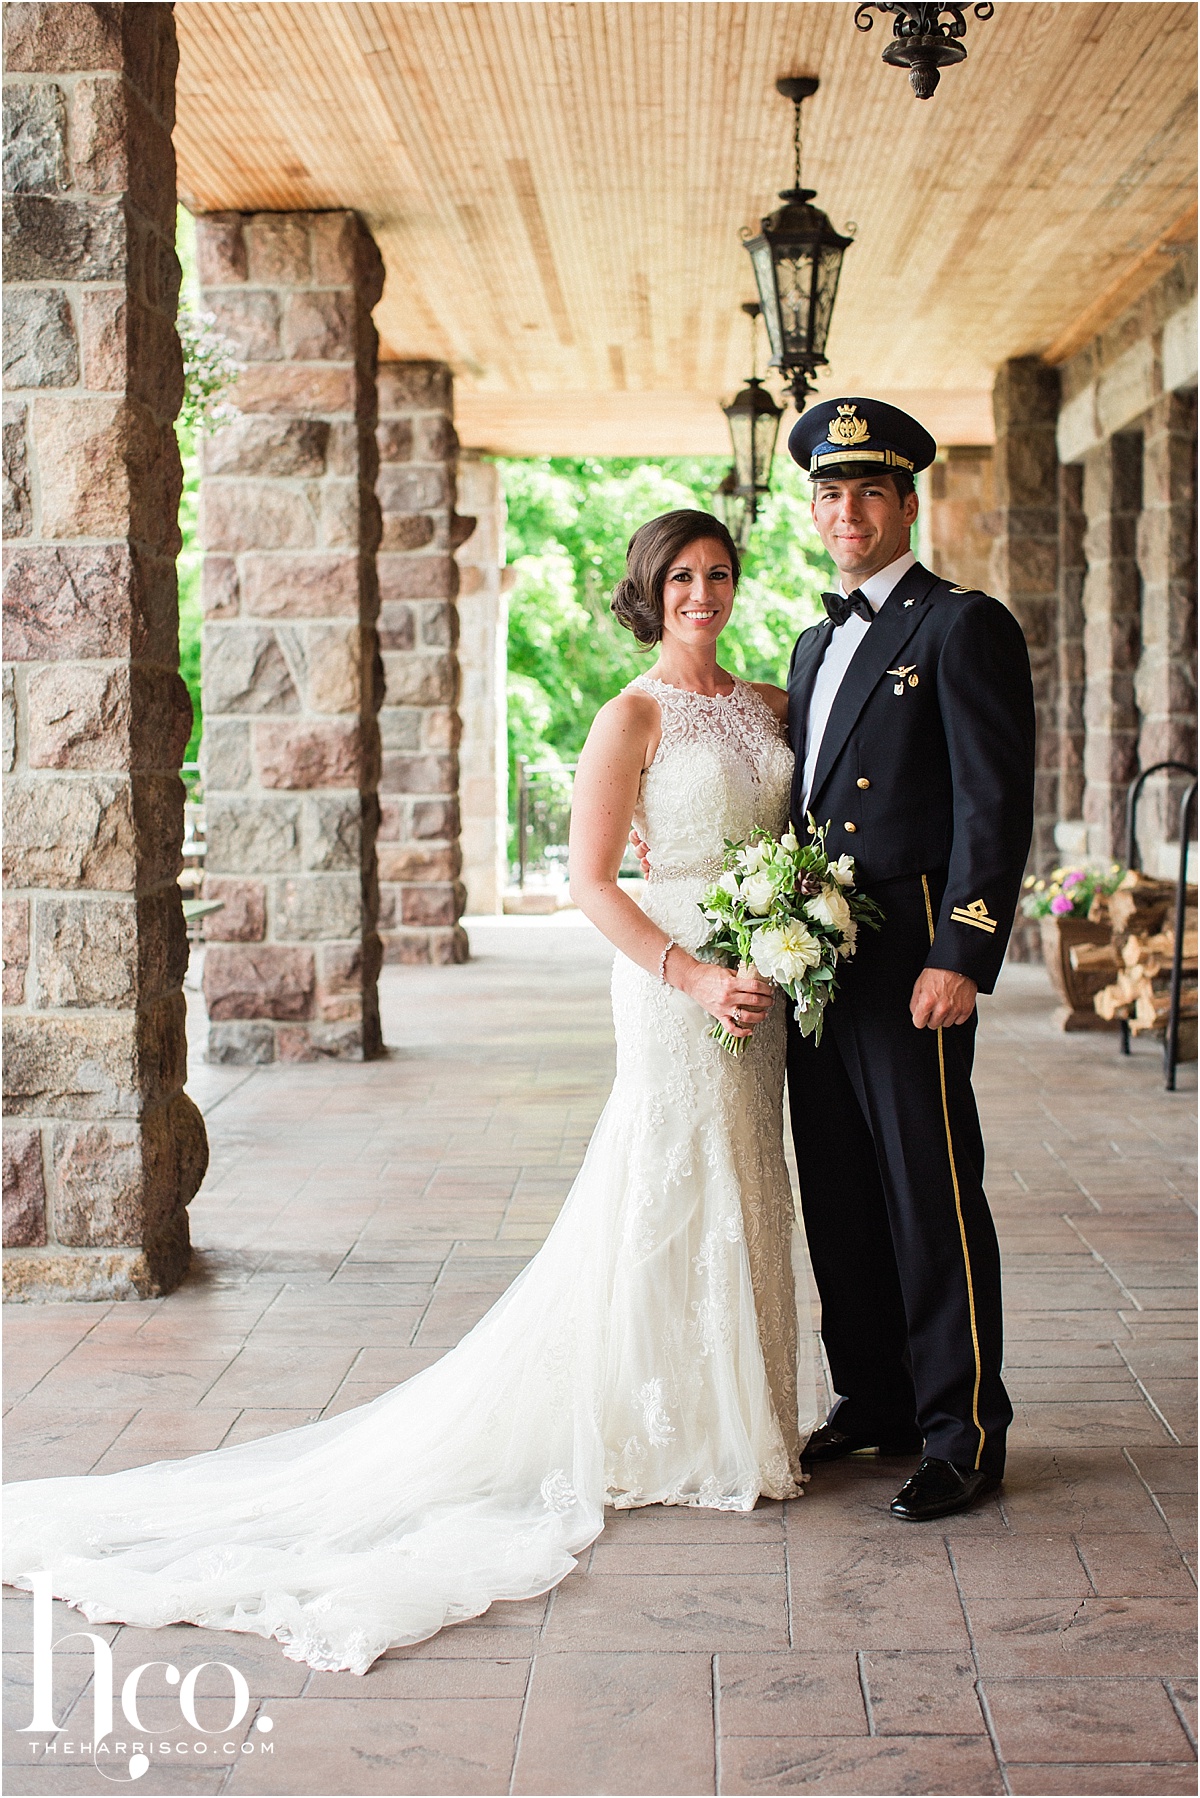 the-best-wedding-photographer-Saratoga-Springs-upstate-NY-Lake-George-Saratoga-Springs-The-inn-at-erlowest